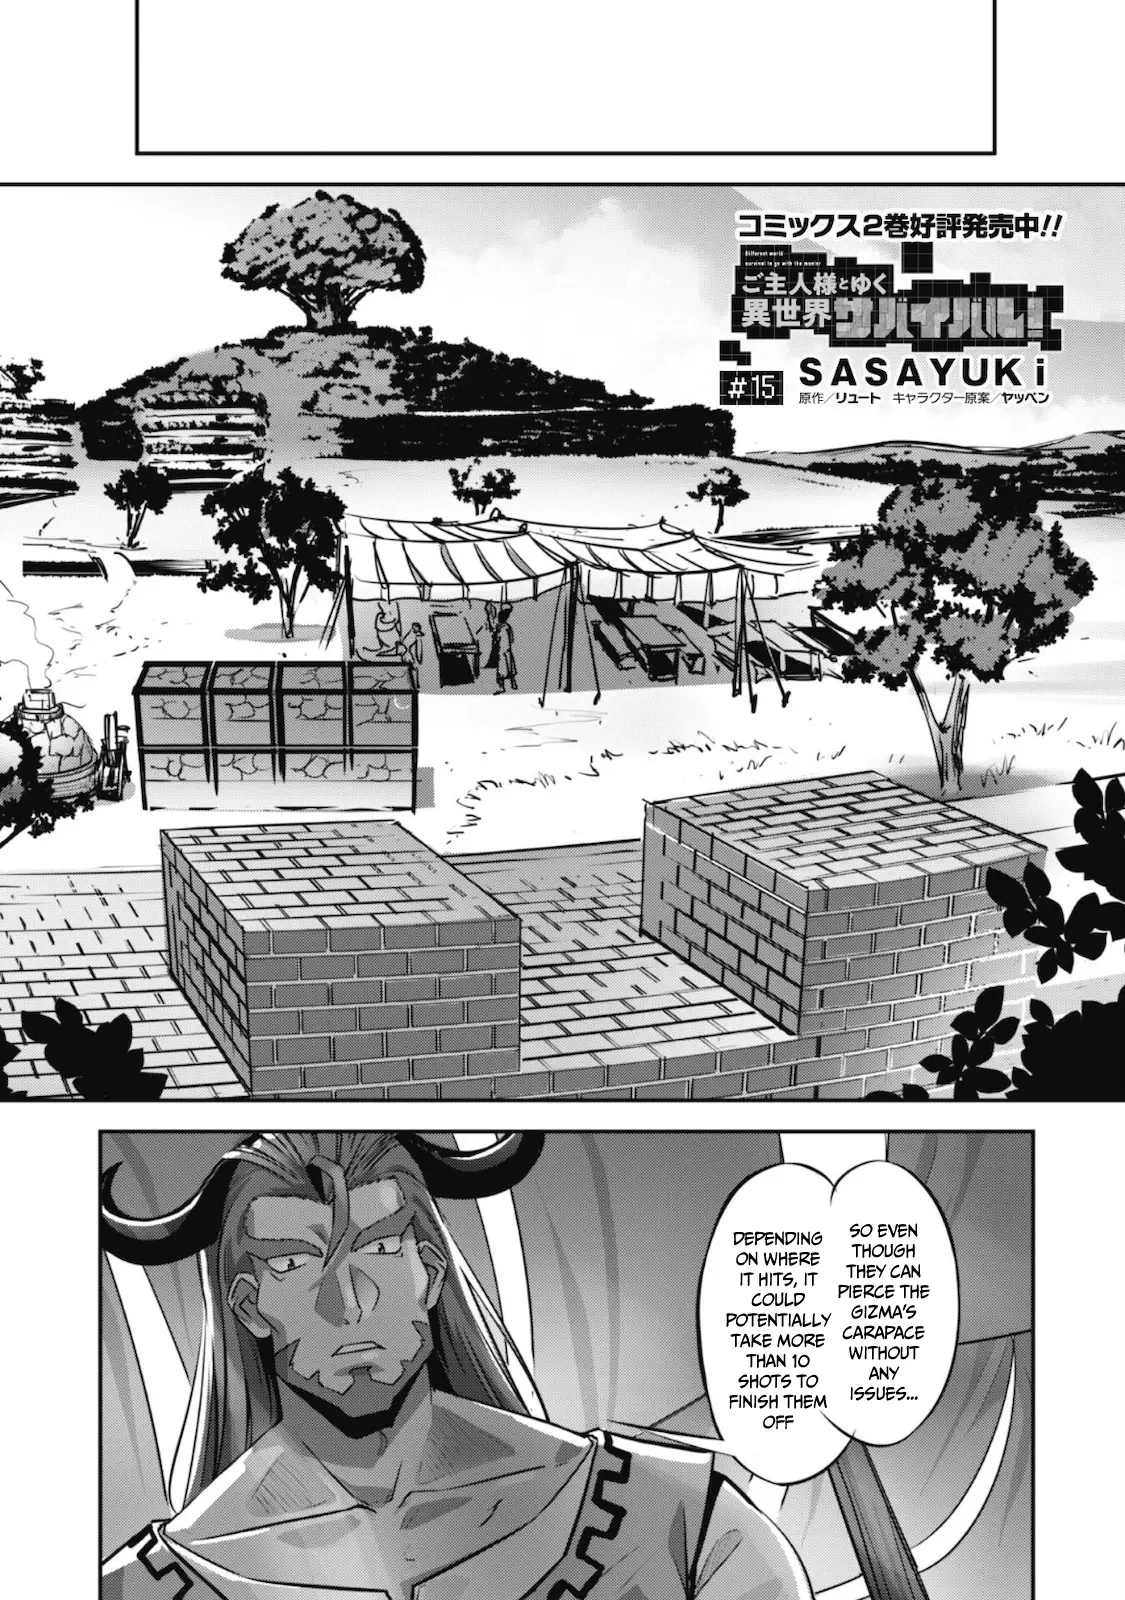 Goshujin-Sama To Yuku Isekai Survival! - 15 page 2-88273c4f